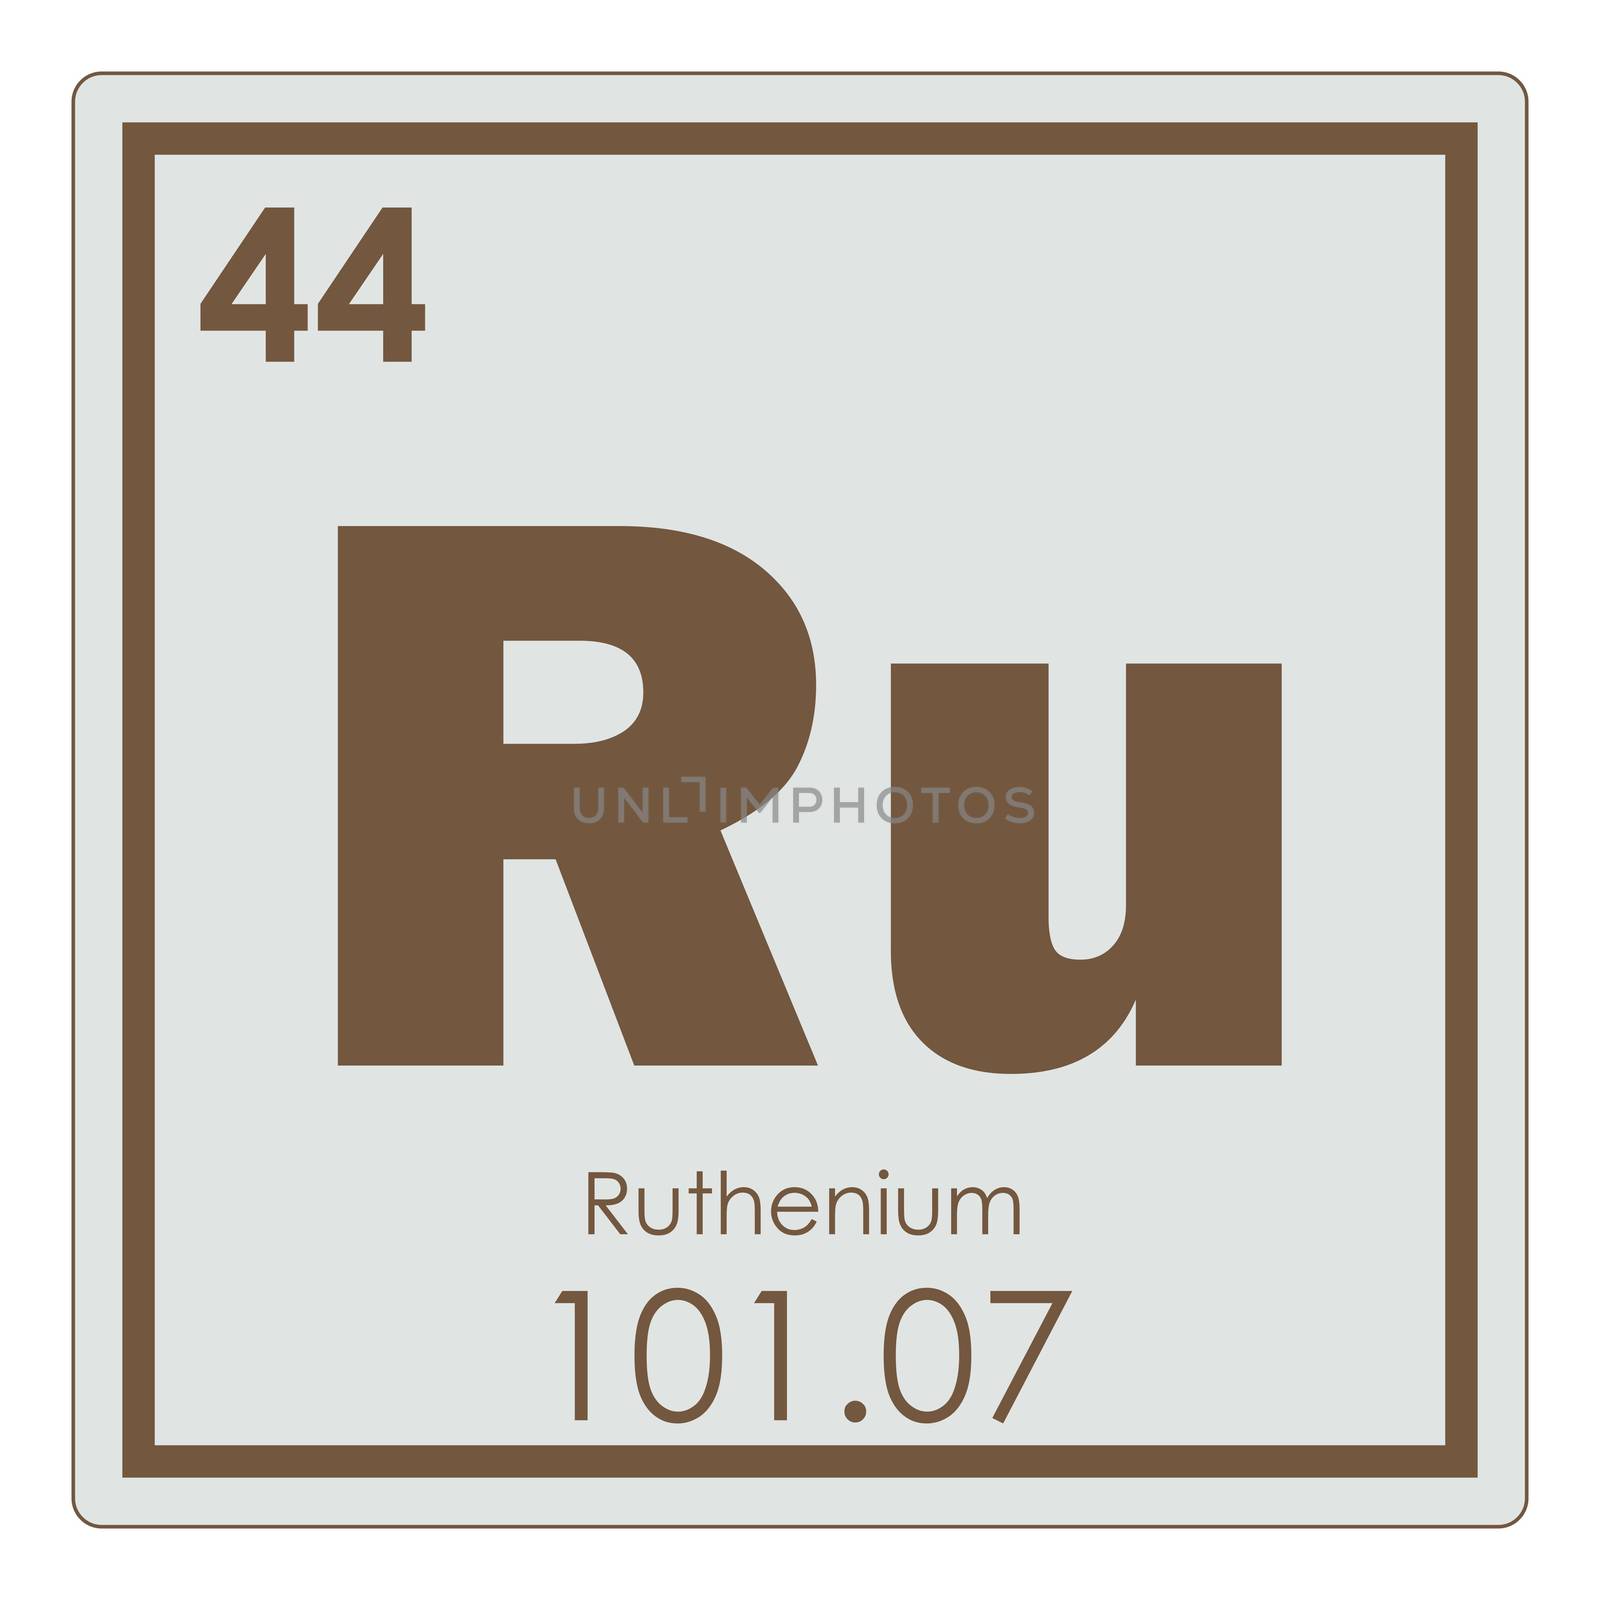 Ruthenium chemical element by tony4urban